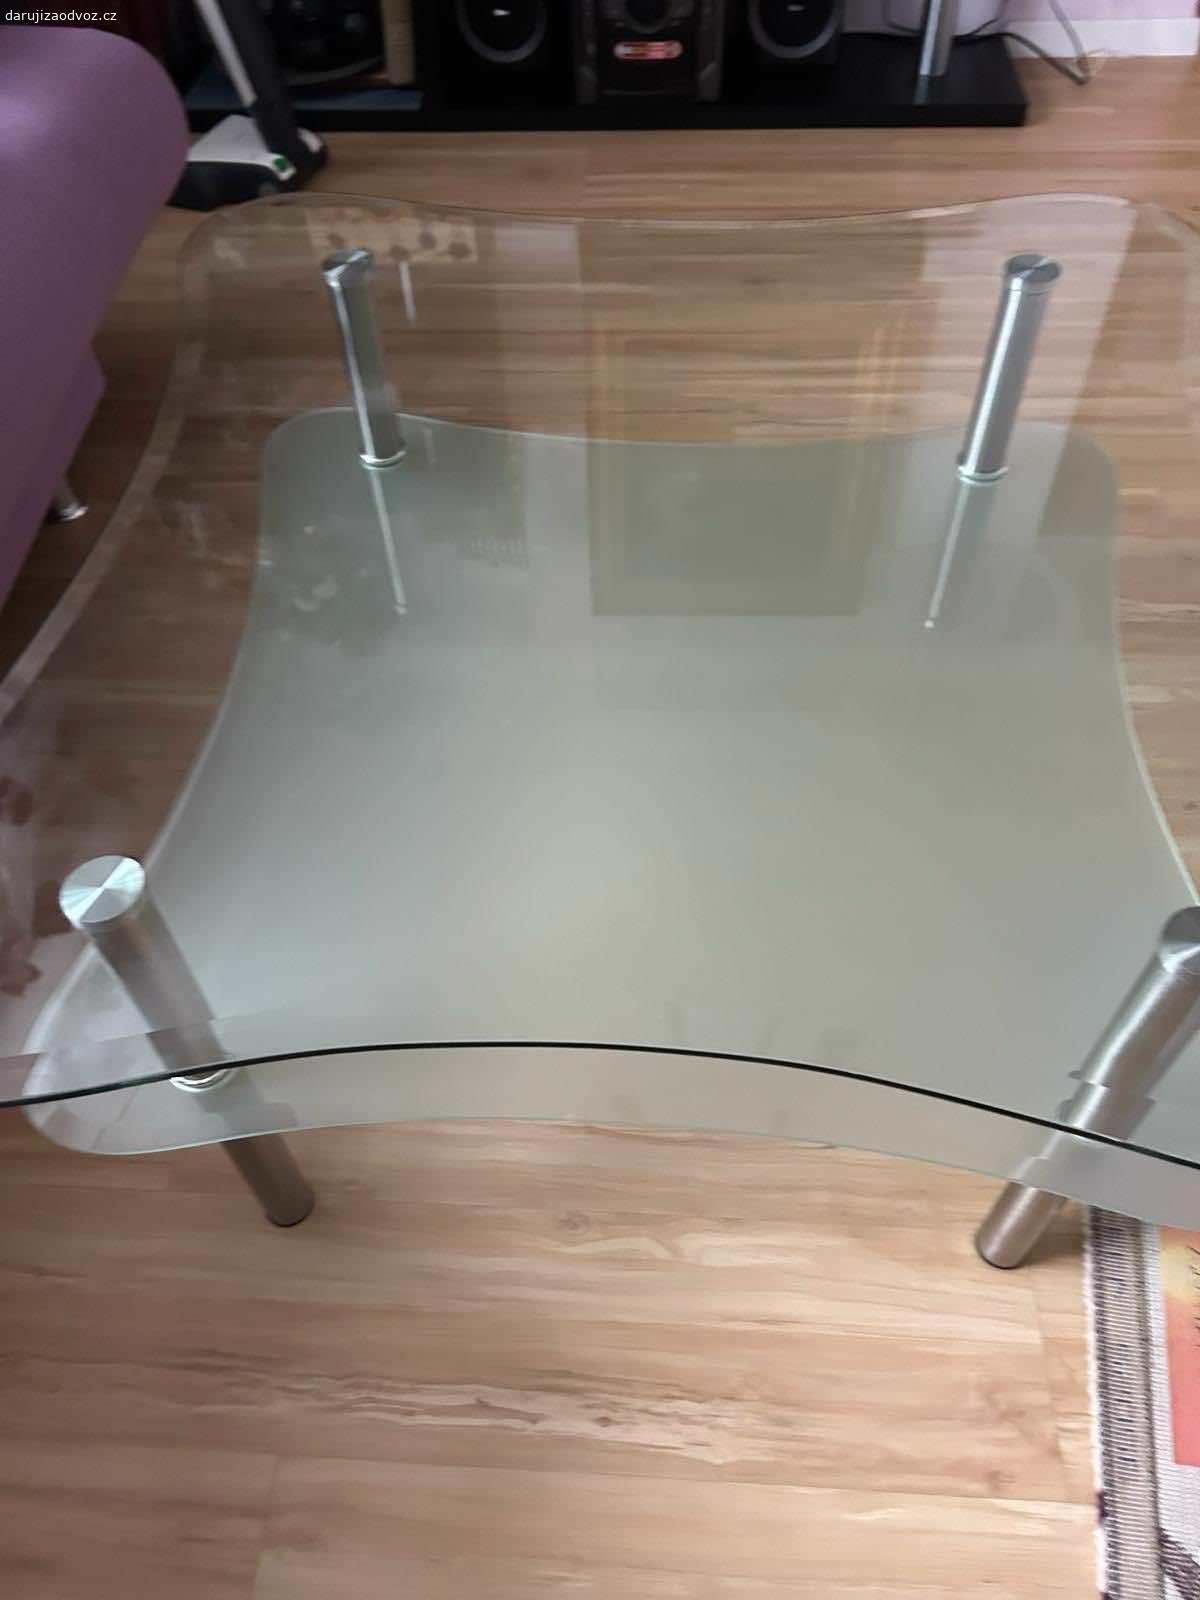 Daruji konferenční stůl. Stůl kov , sklo v dobrém stavu
80x80cm, výška 45cm